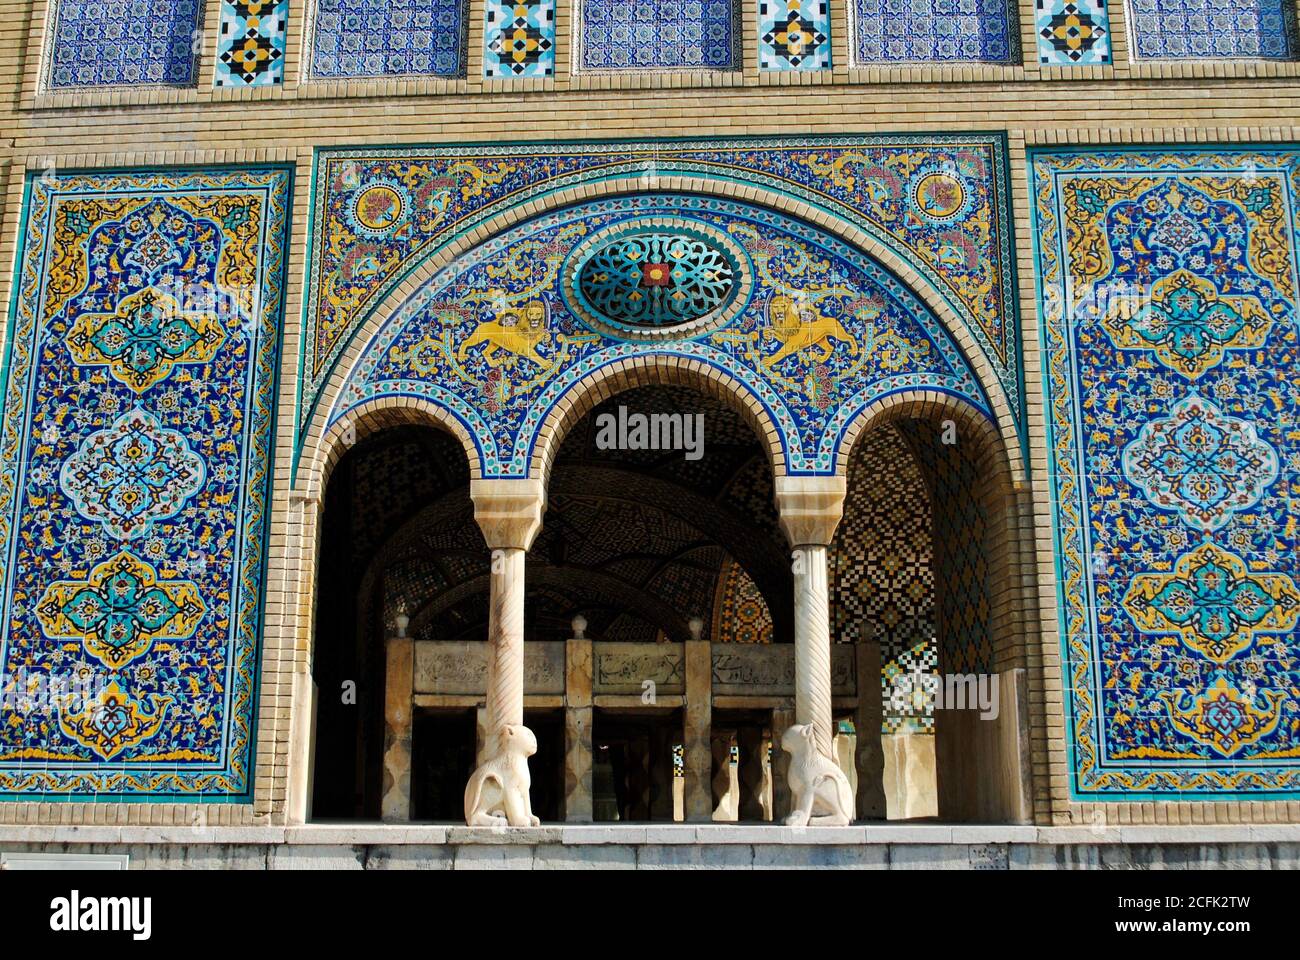 The beautiful tiled work of Golestan Palace, originally built in 16th-Century. UNESCO world heritage site. Tehran Iran Stock Photo